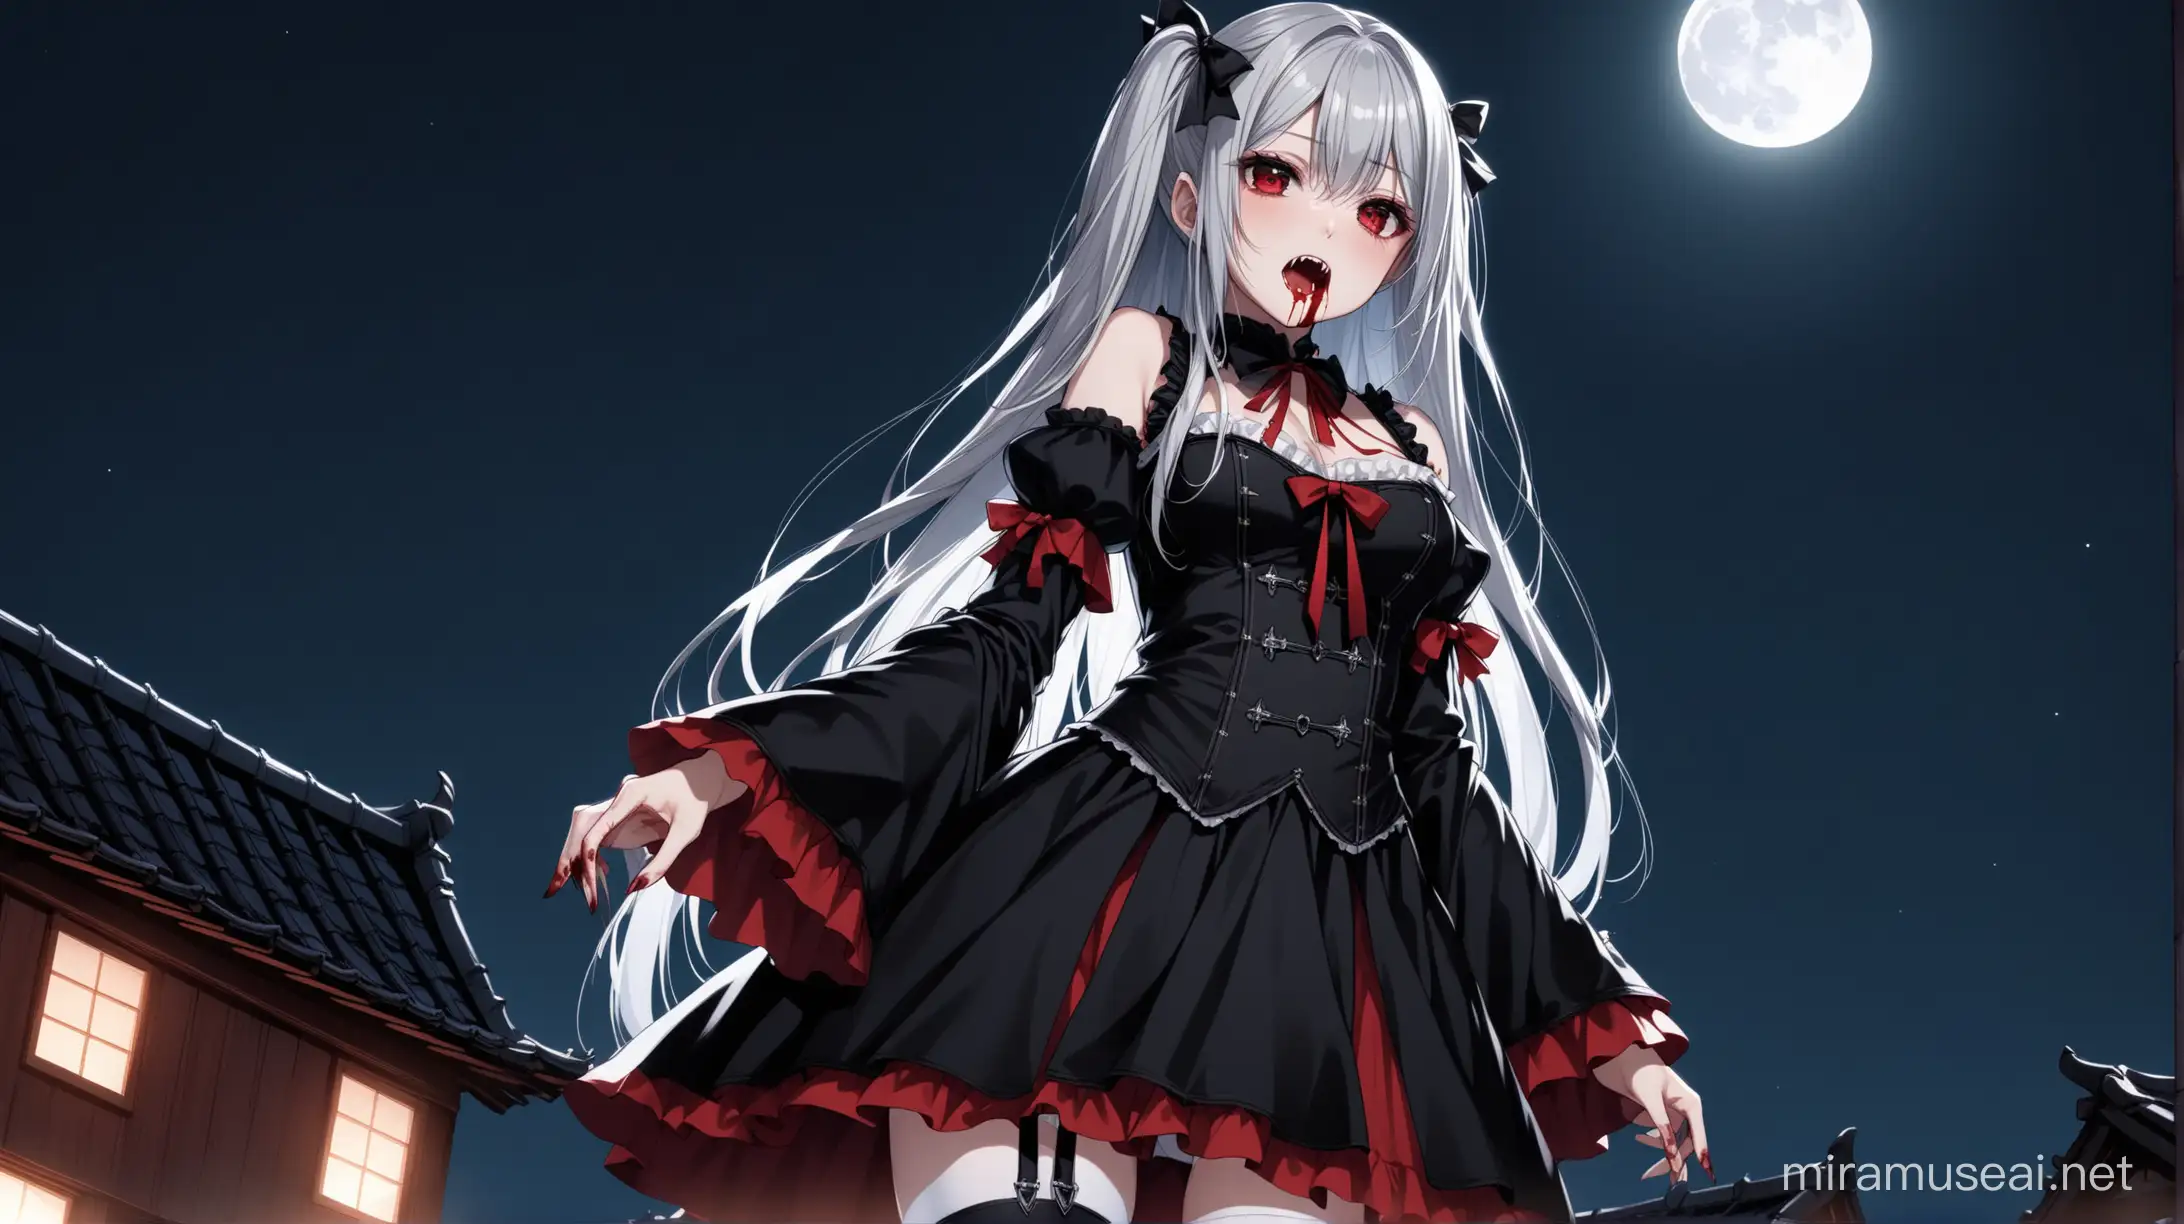 Ethereal Vampire Girl Standing on Rooftop Under Moonlight